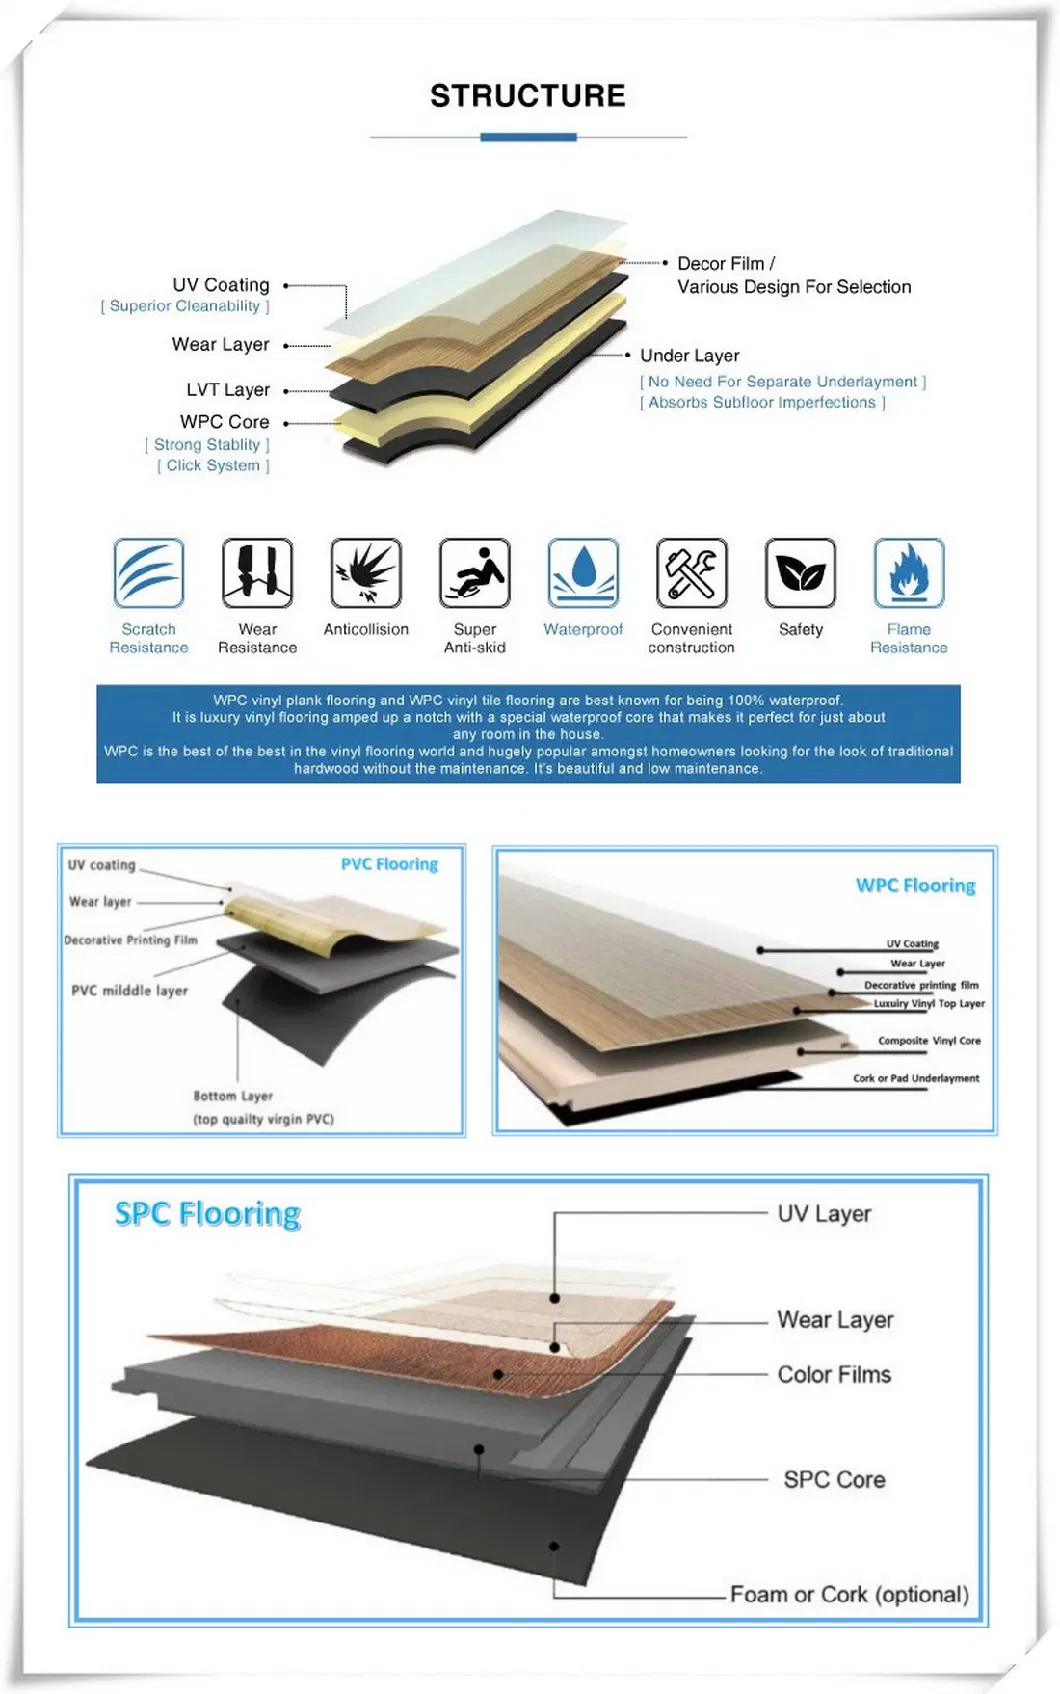 Marble Design / Laminate Wooden Color Fireproof Waterproof Stone Plastic Composite / Spc Flooring / PVC Luxury Vinyl Plank Floor Tile